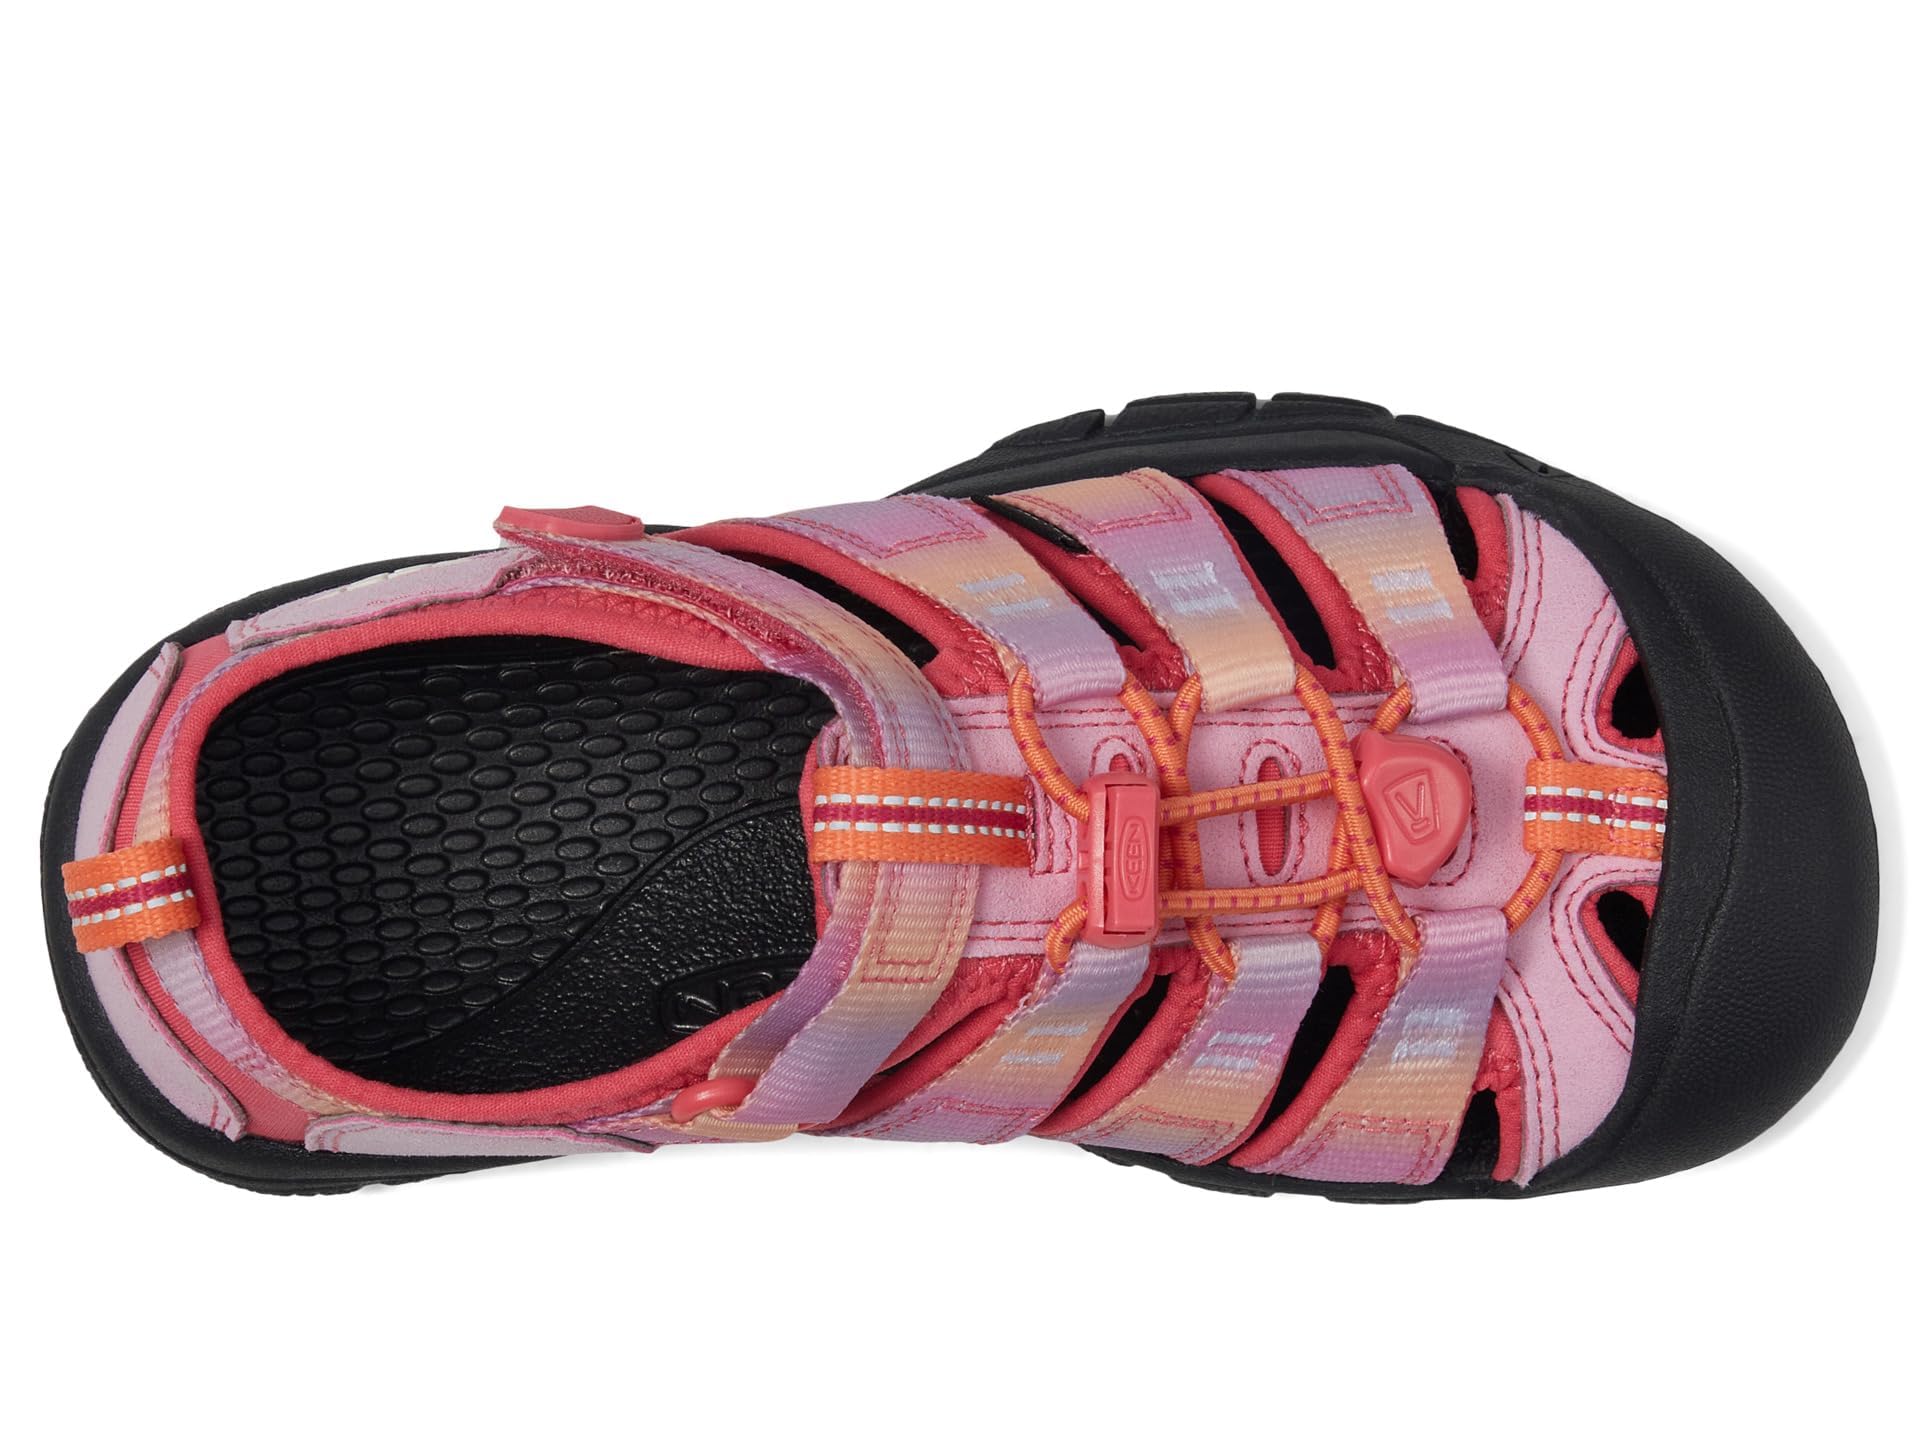 KEEN Newport H2 Closed Toe Water Sandals, Hot Pink/Pastel Lavender, 4 US Unisex Big Kid